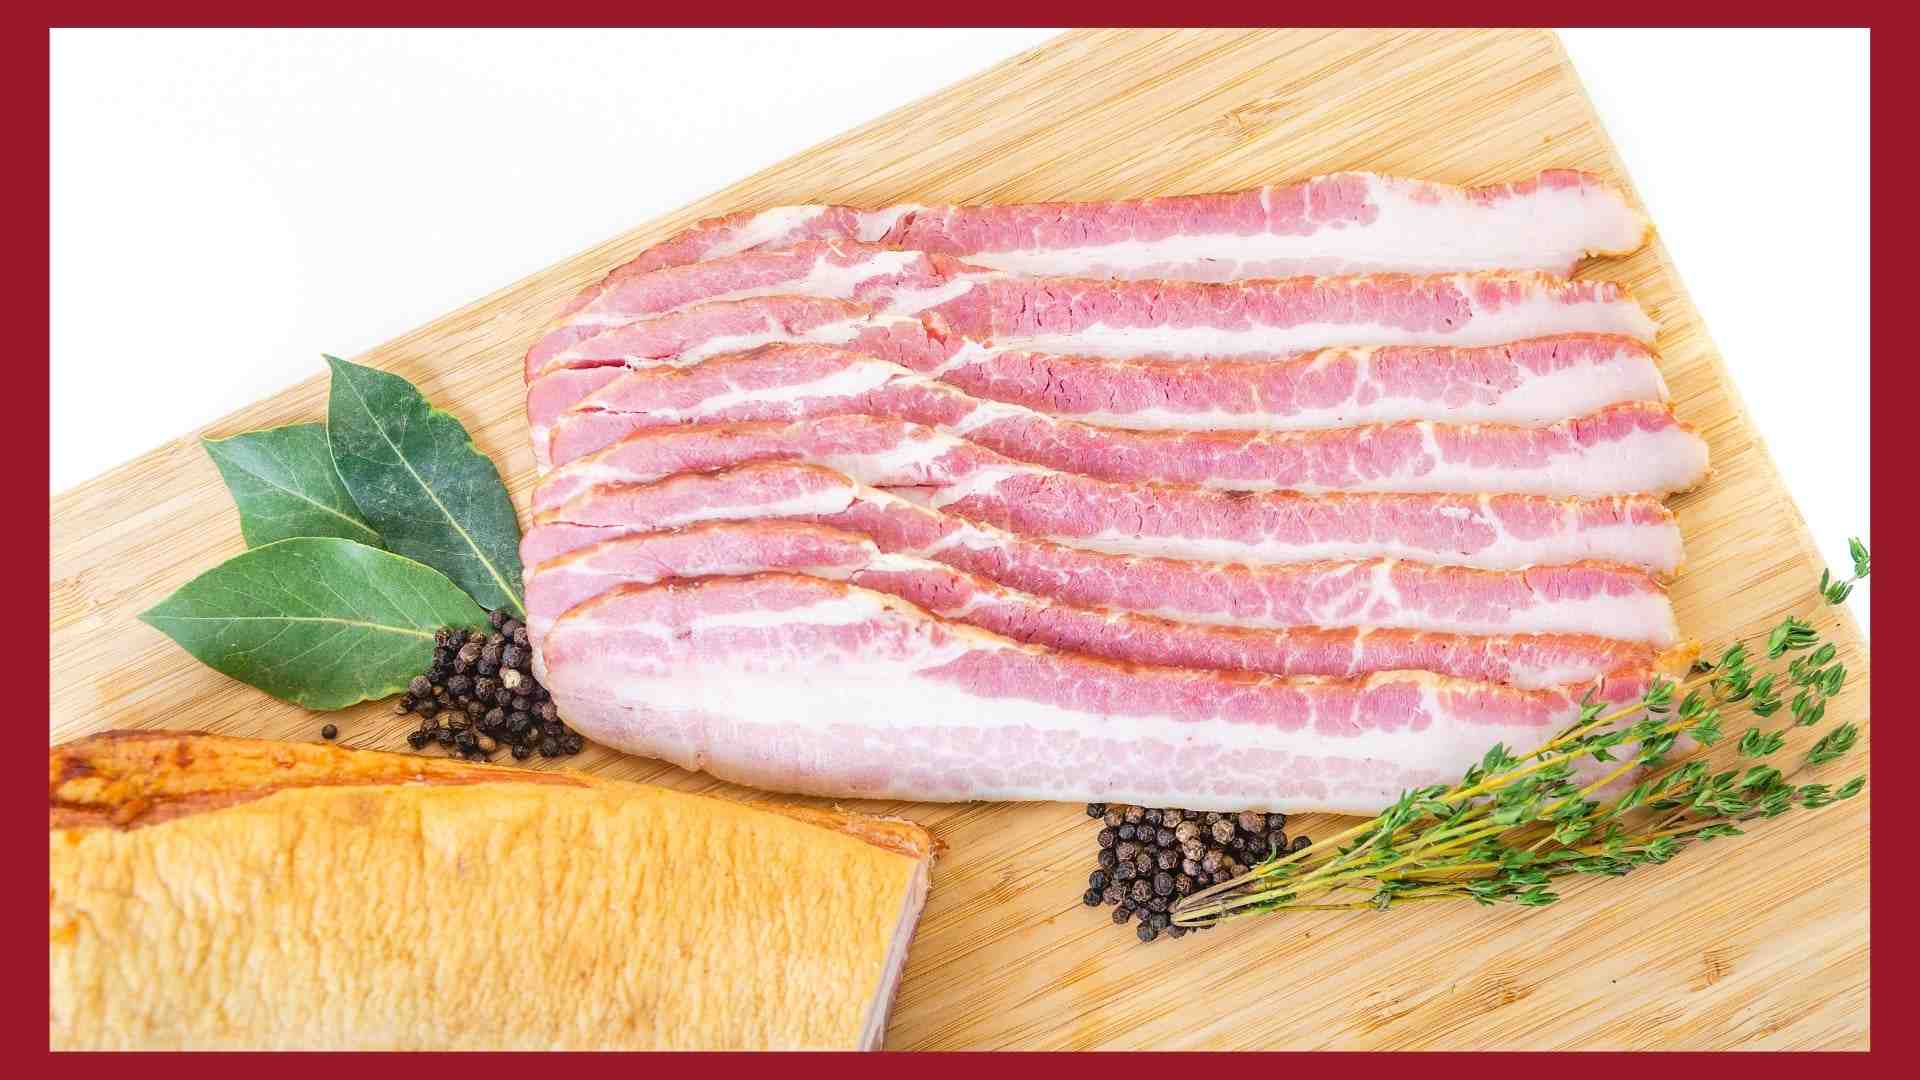 Is pork loin the same as bacon?